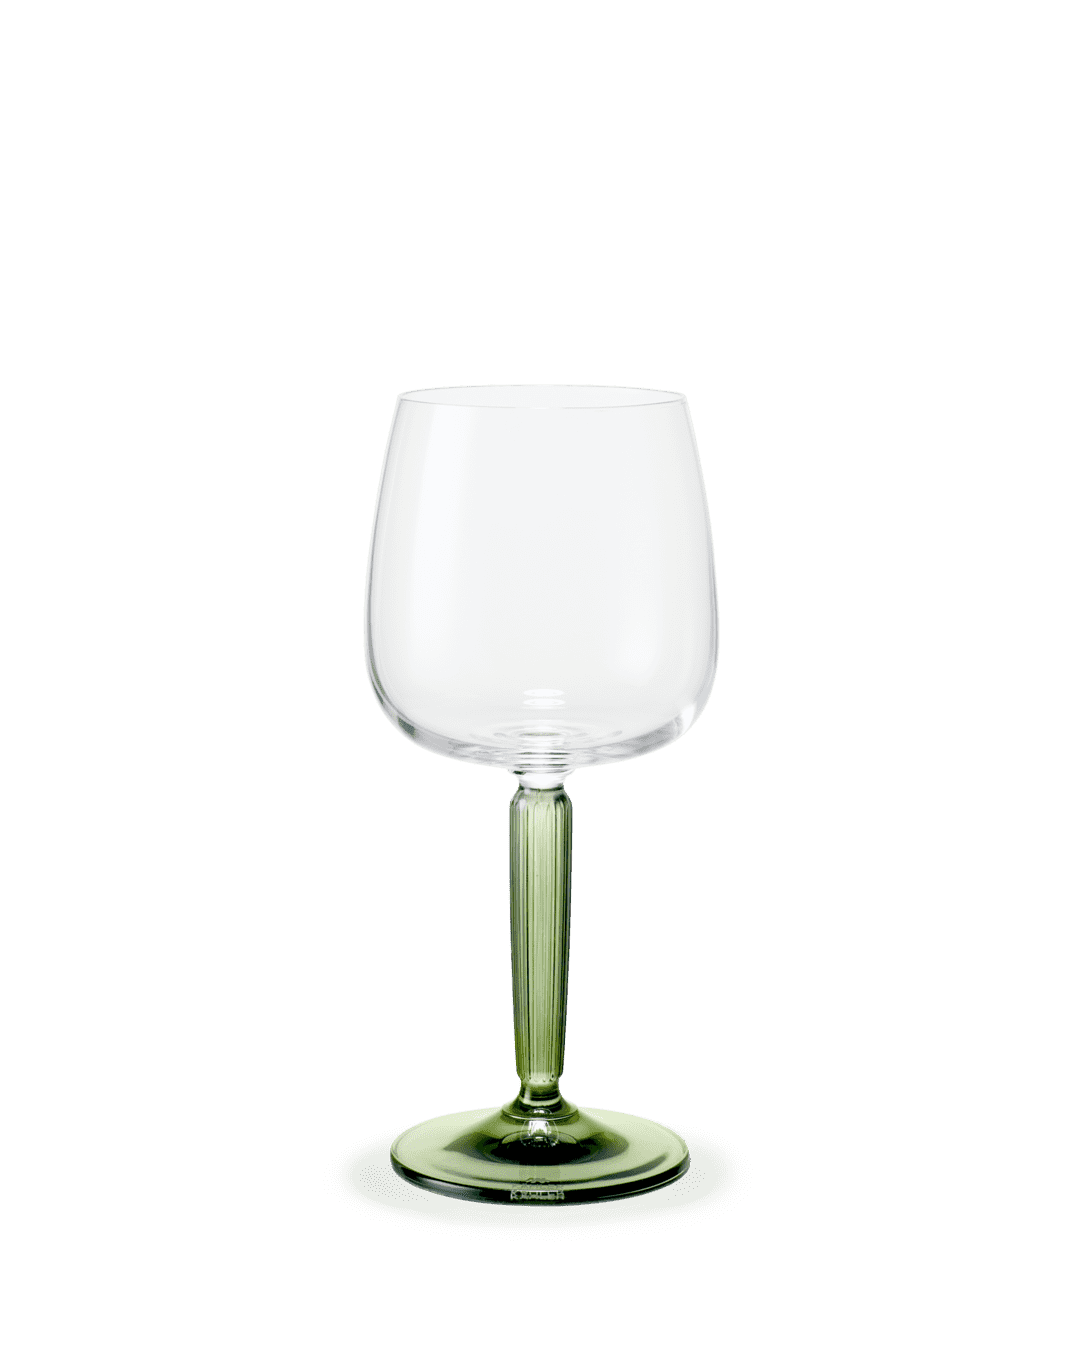 Hammershøi White Wine Glass green 2 pcs. H: 7.3" Ø: 3.3" 11.8 oz